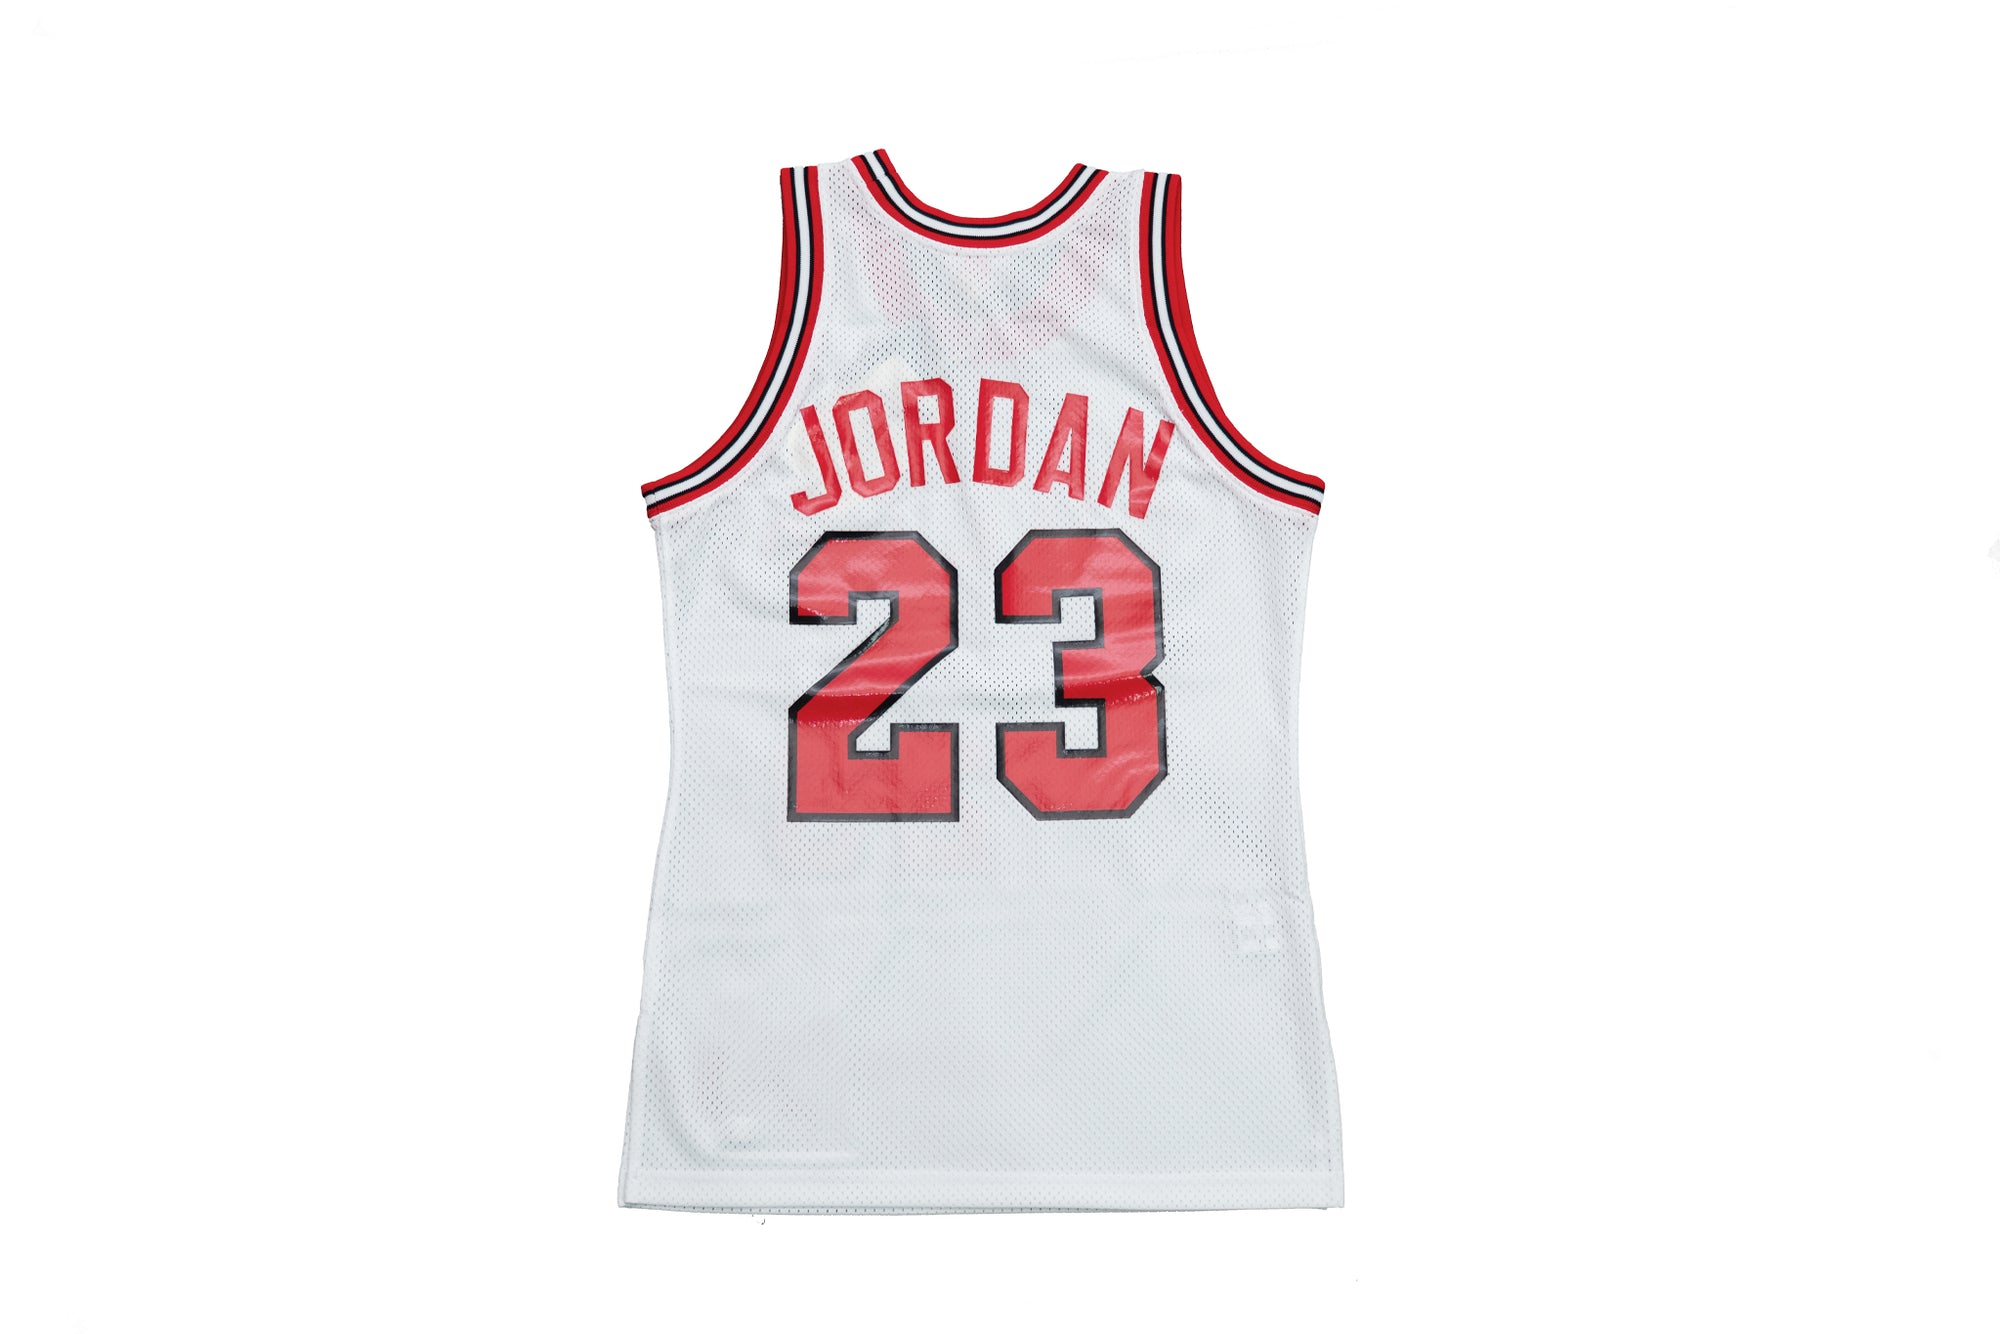 Mitchell & Ness Authentic 1984 Chicago Bulls Michael Jordan Rookie